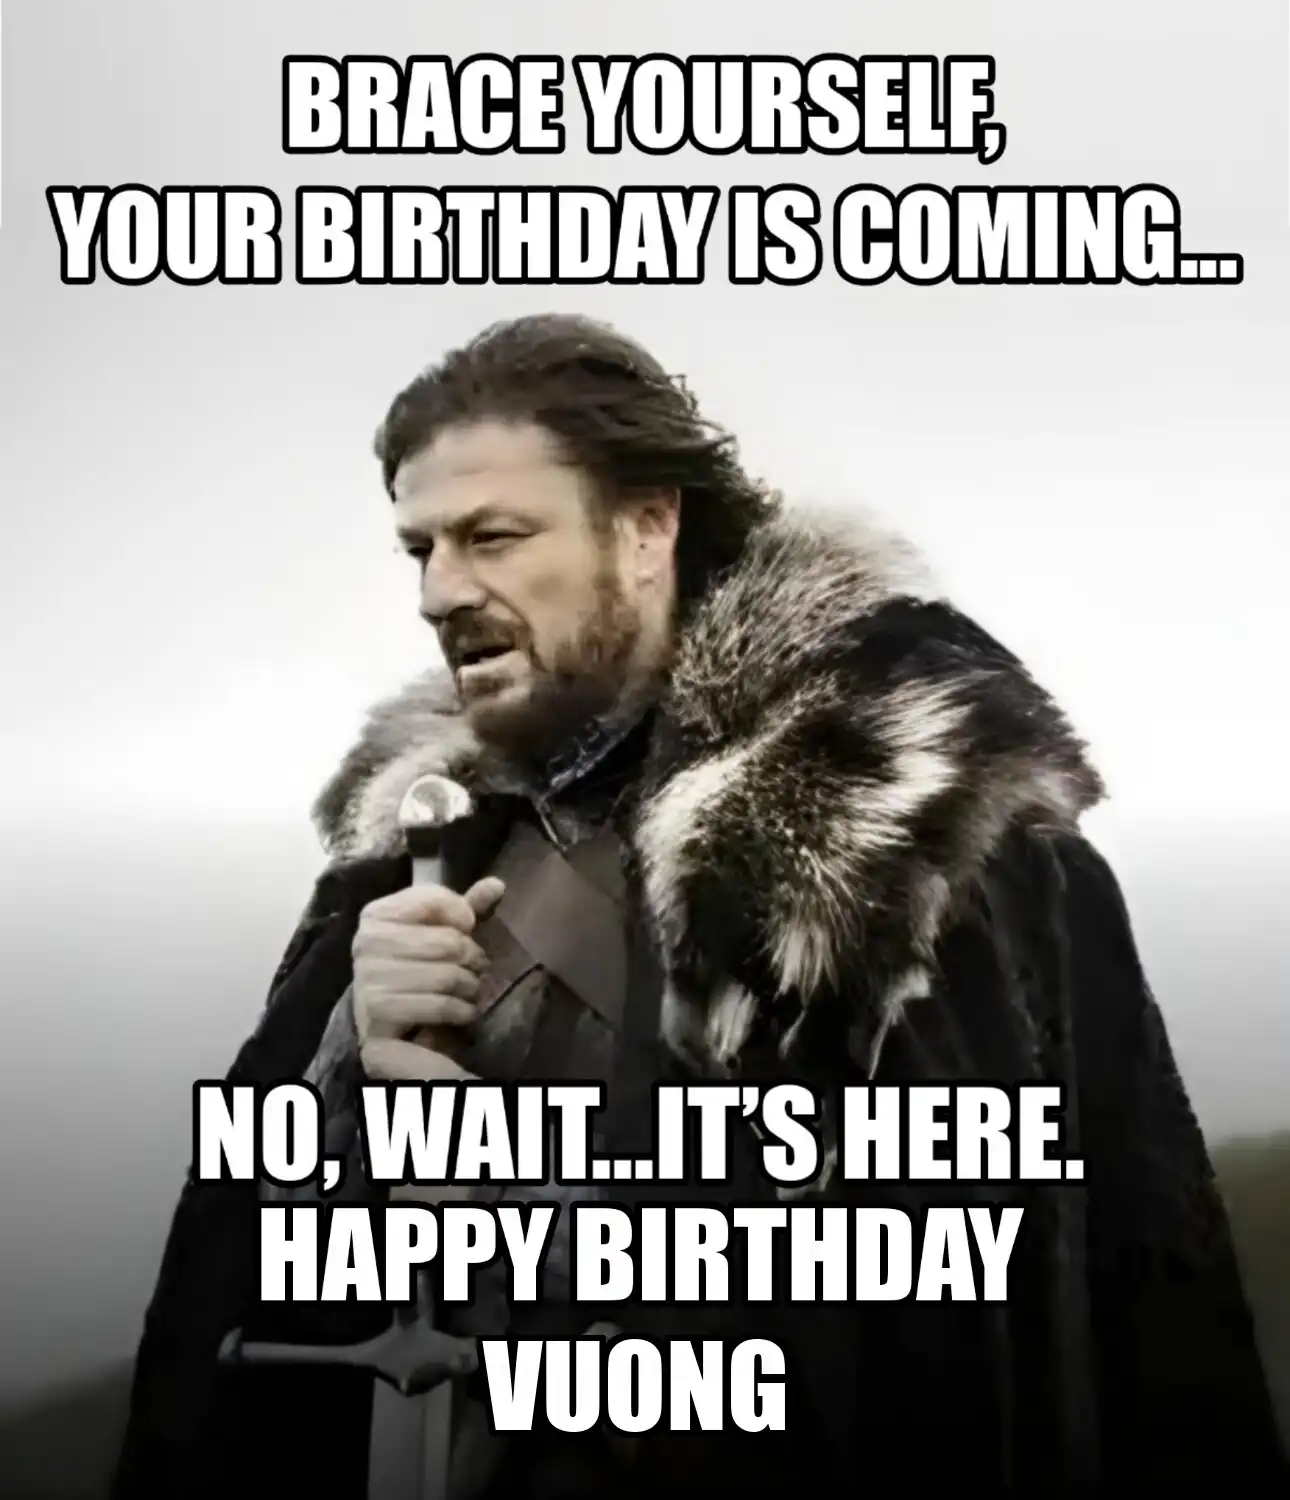 Happy Birthday Vuong Brace Yourself Your Birthday Is Coming Meme